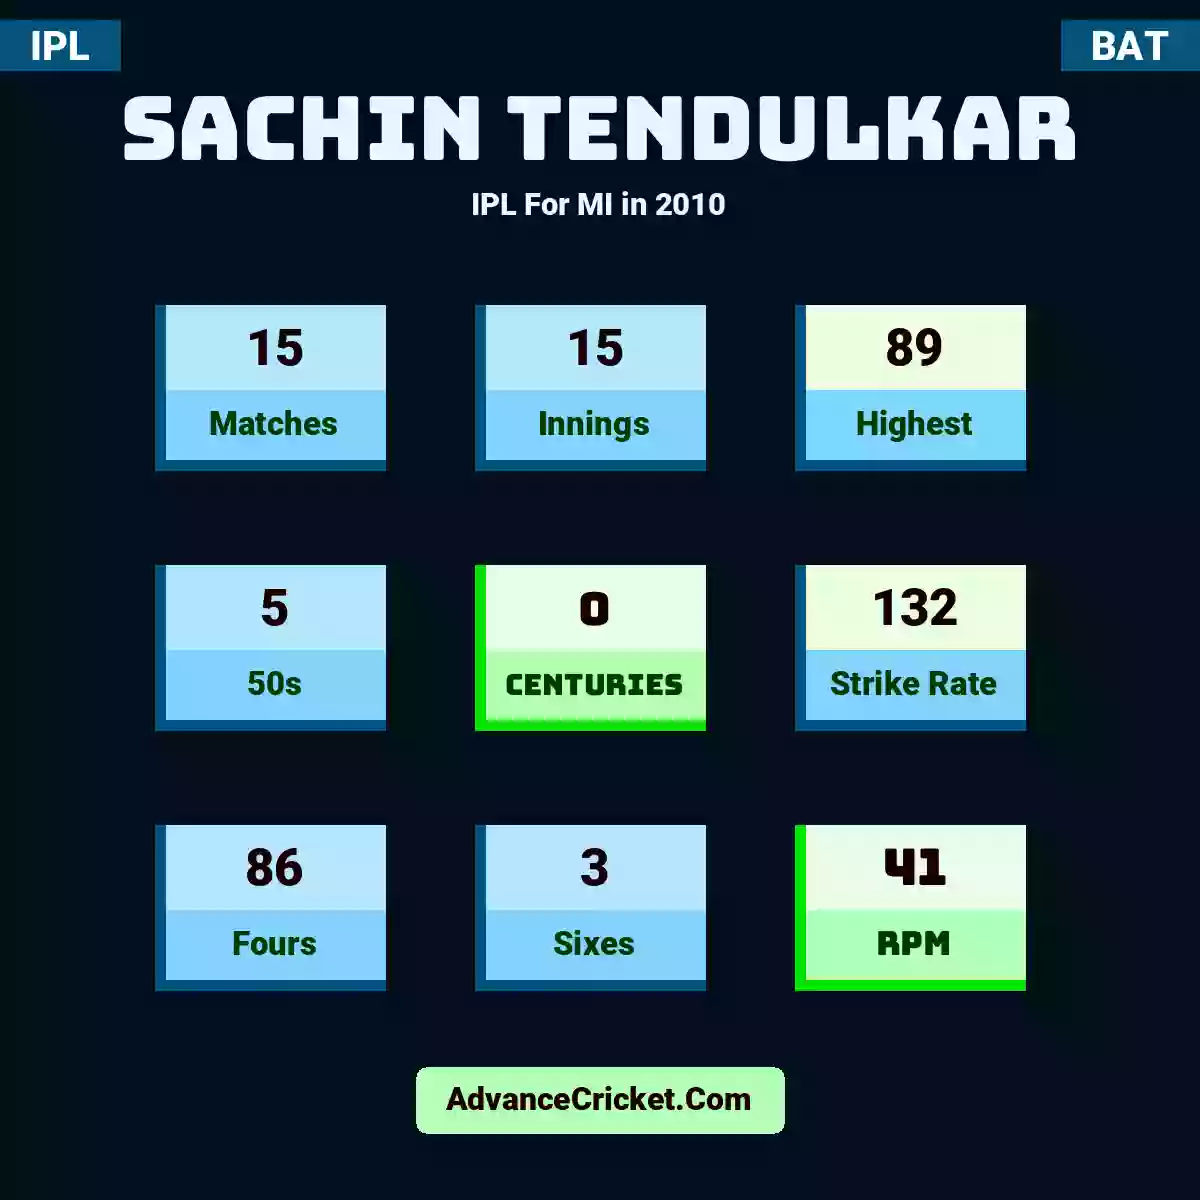 Sachin Tendulkar IPL  For MI in 2010, Sachin Tendulkar played 15 matches, scored 89 runs as highest, 5 half-centuries, and 0 centuries, with a strike rate of 132. S.Tendulkar hit 86 fours and 3 sixes, with an RPM of 41.